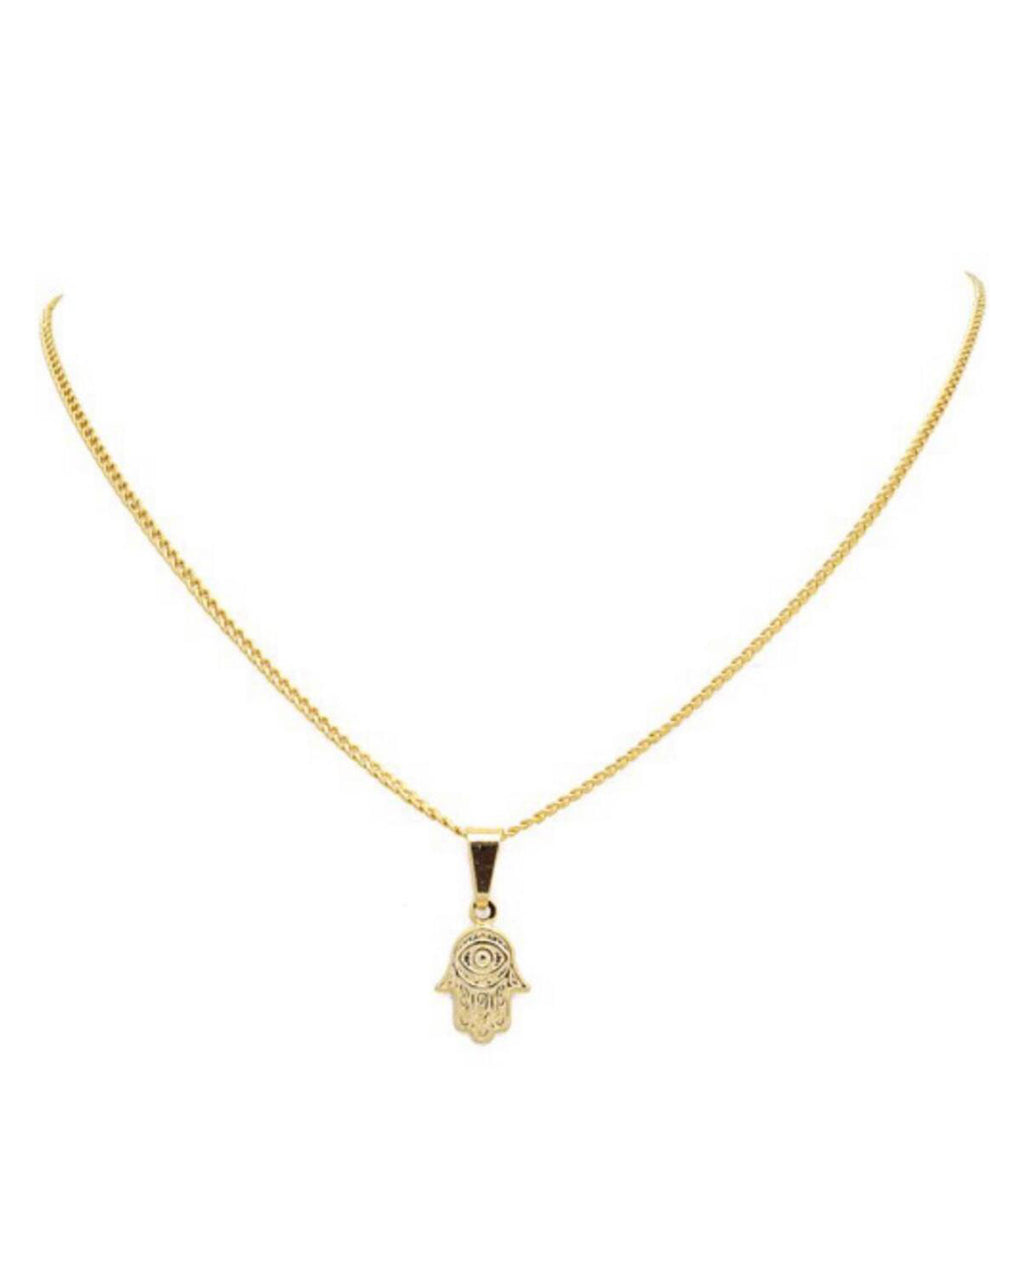 Chain Necklace with Hamsa Pendant